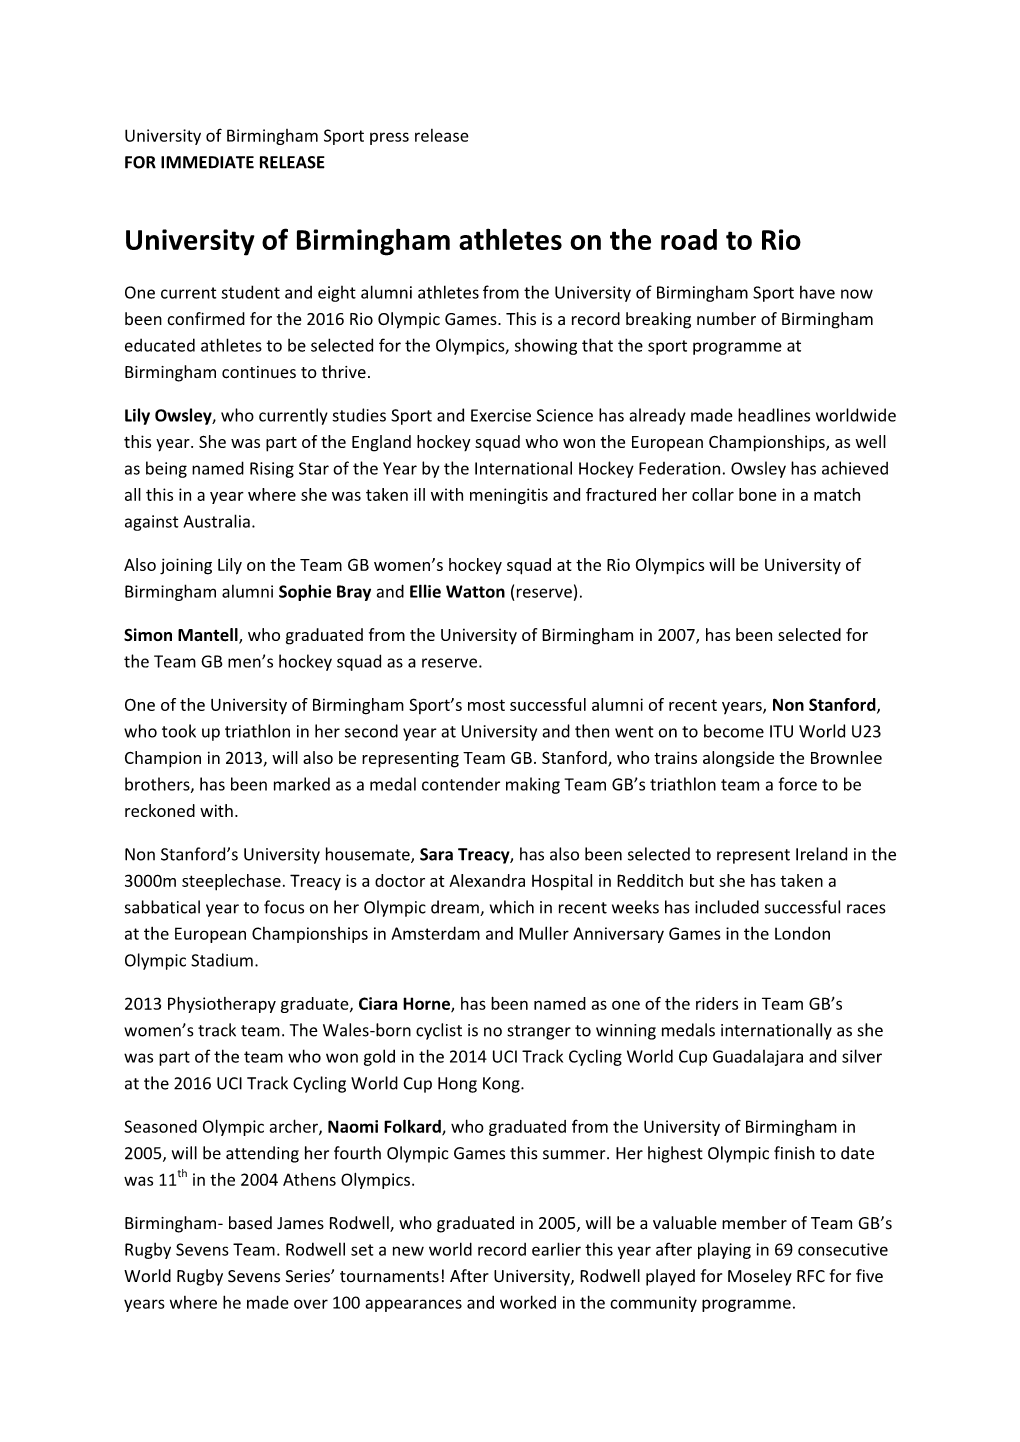 University of Birmingham Athletes on the Road to Rio